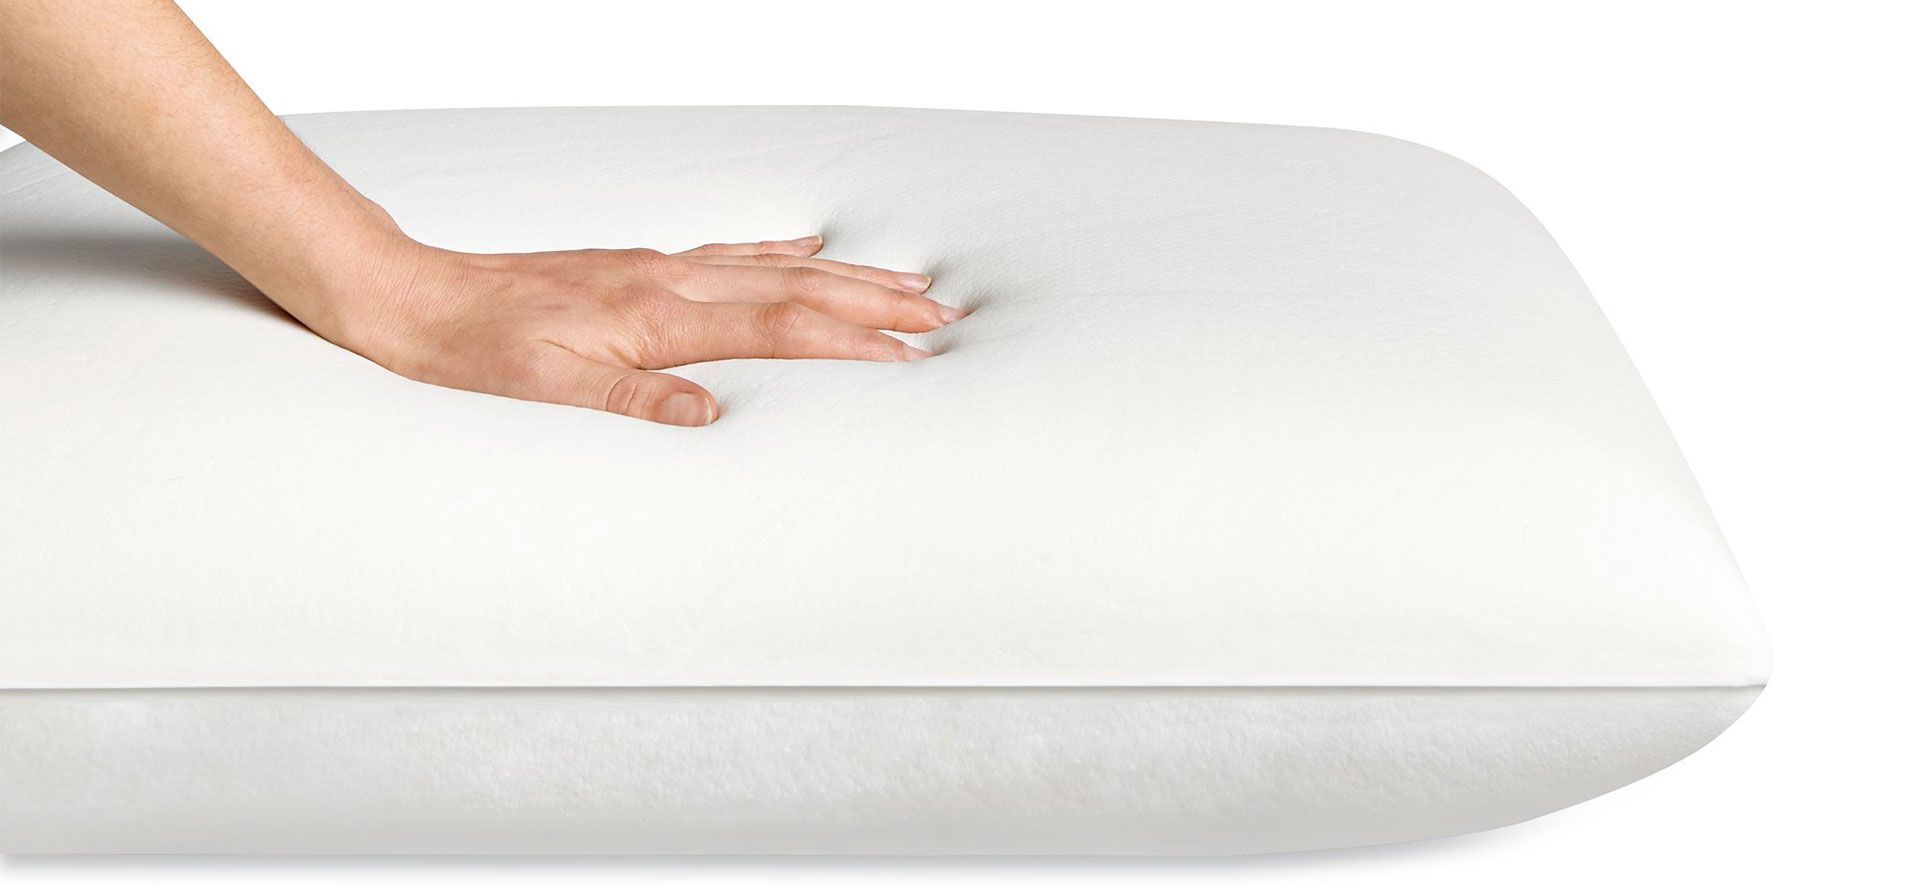 Hand on memory foam pillow.